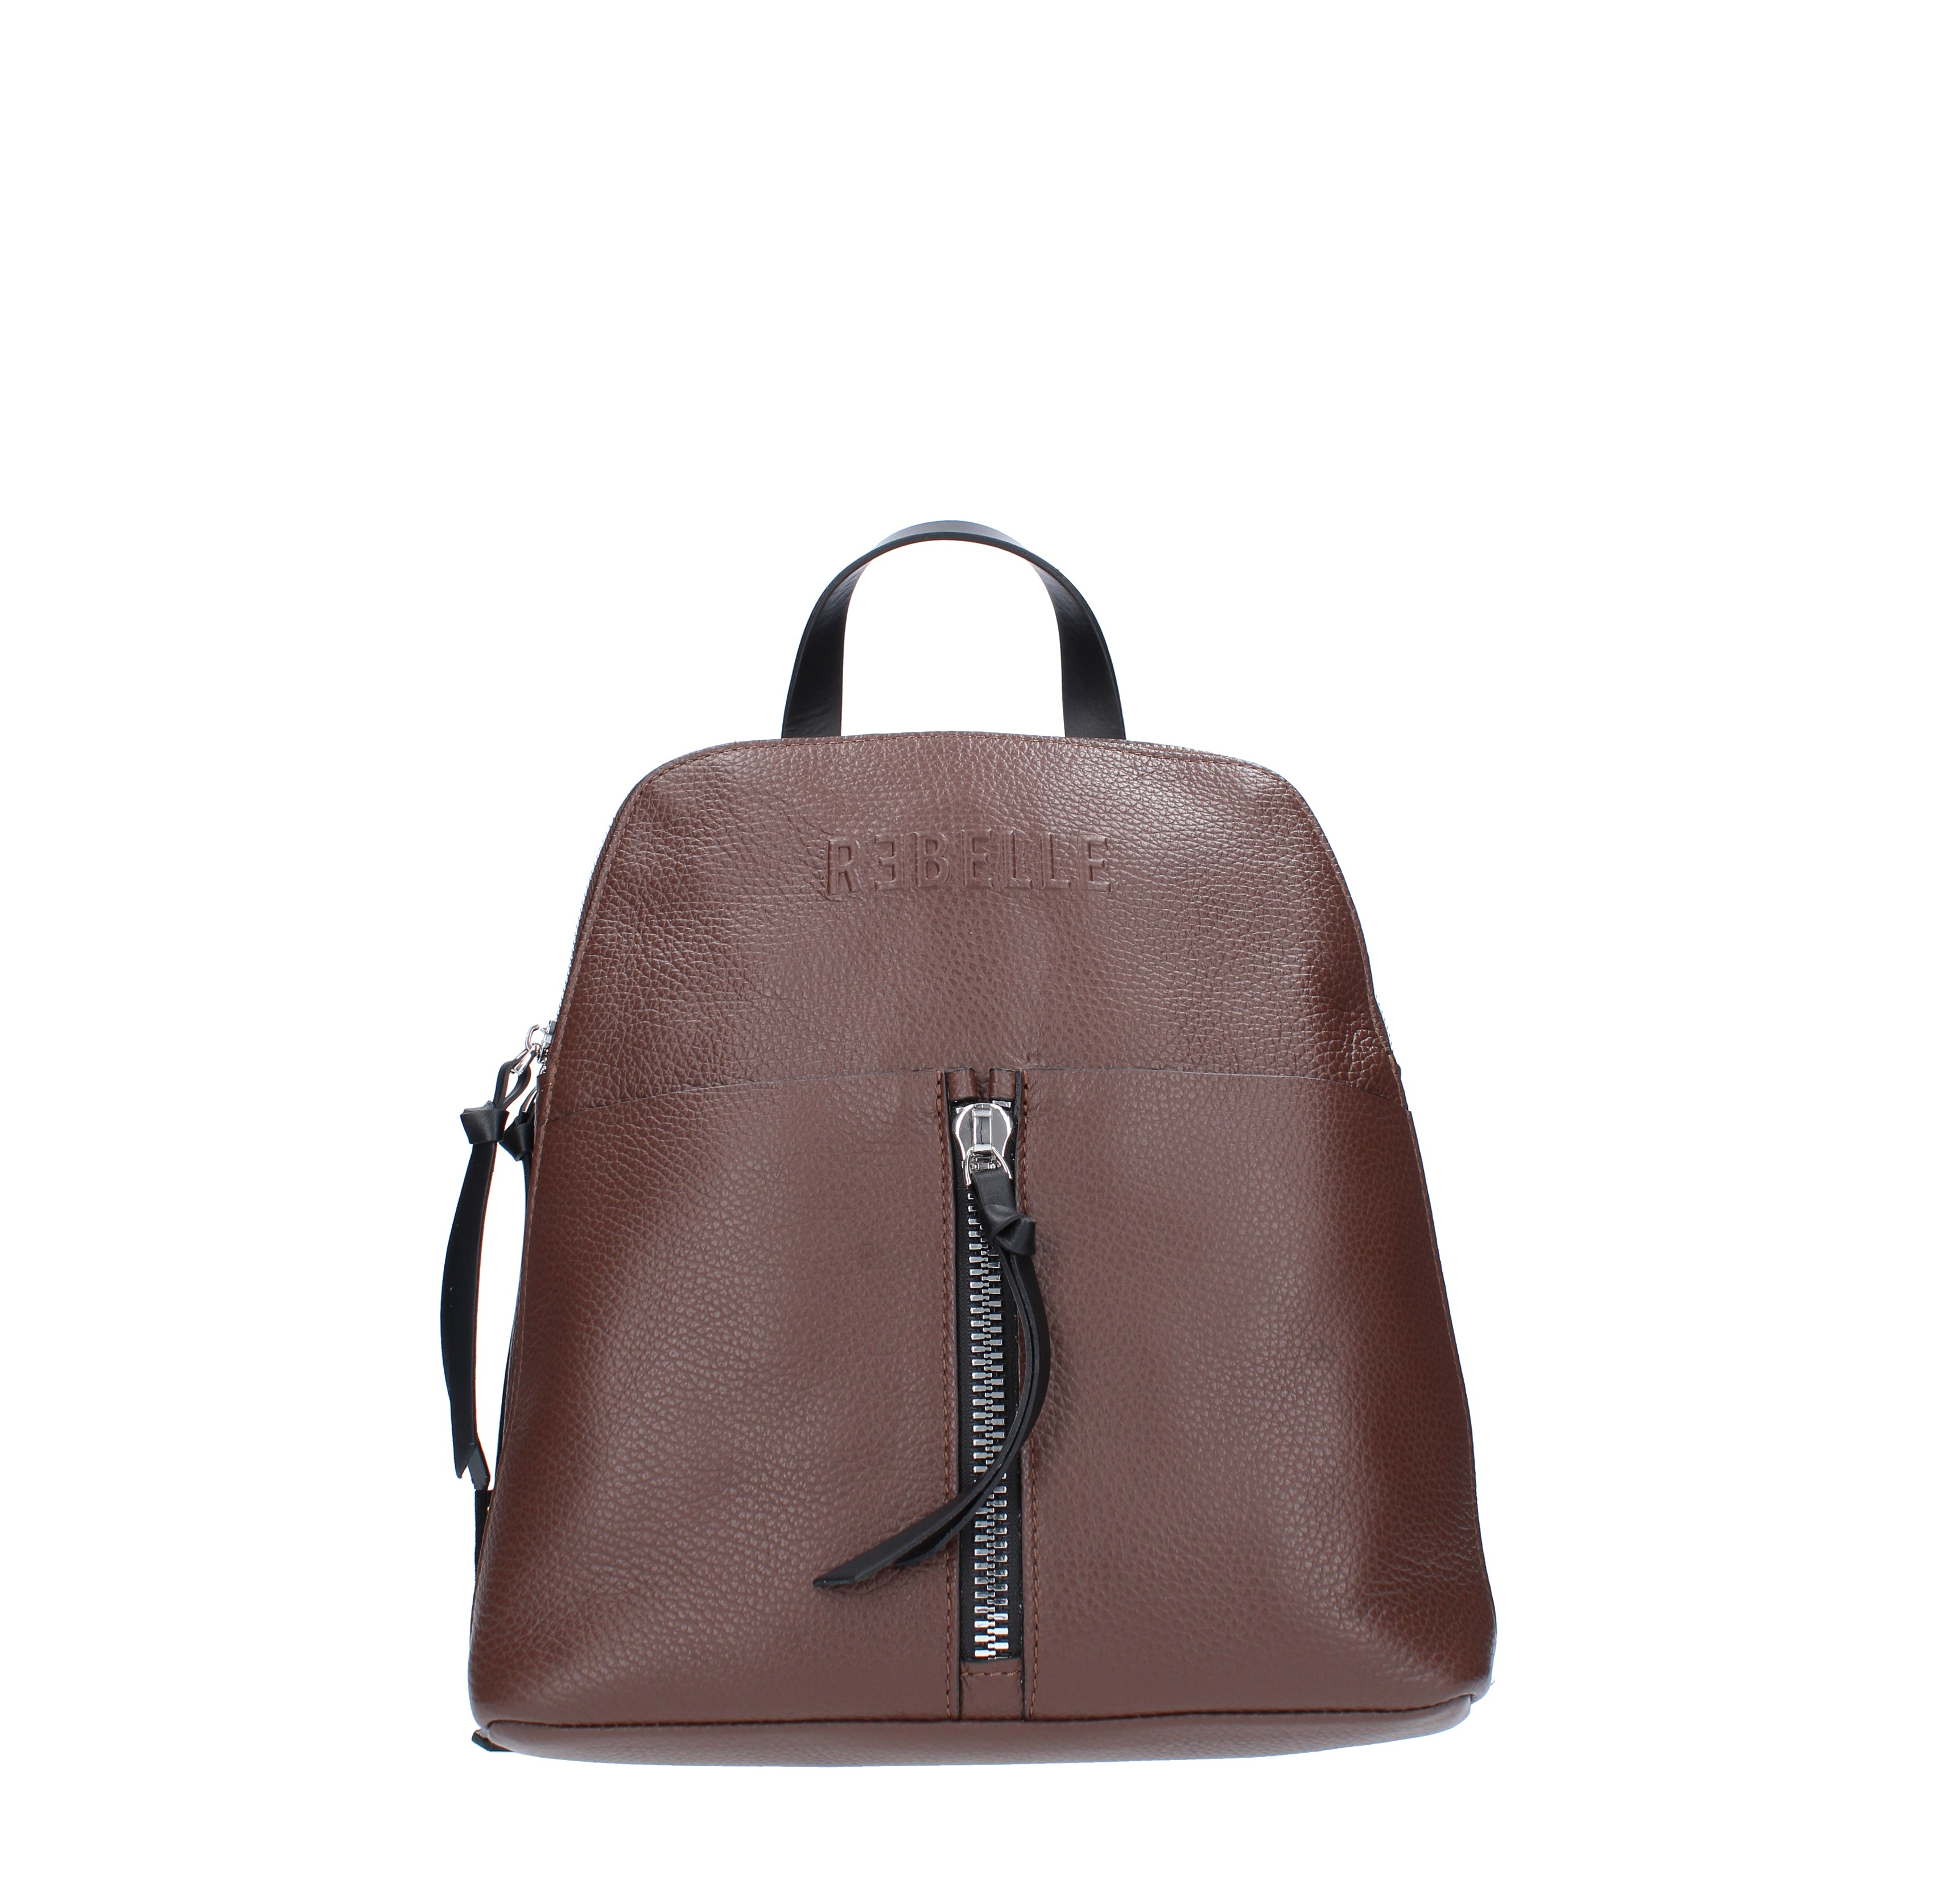 Diana backpack in leather - REBELLE - Ginevra calzature